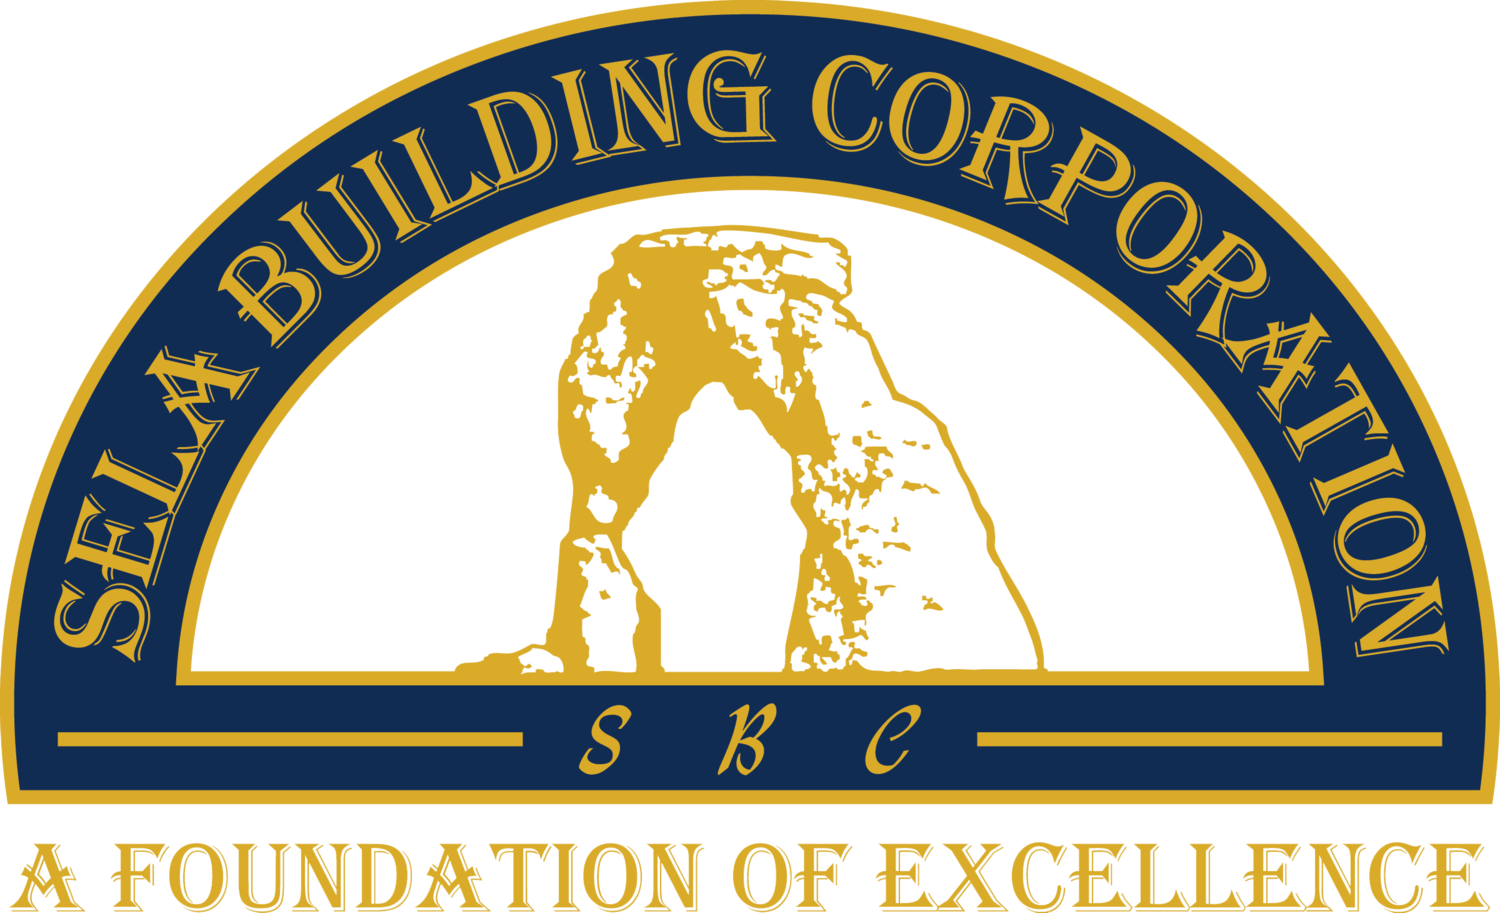 Sela Building Corporation